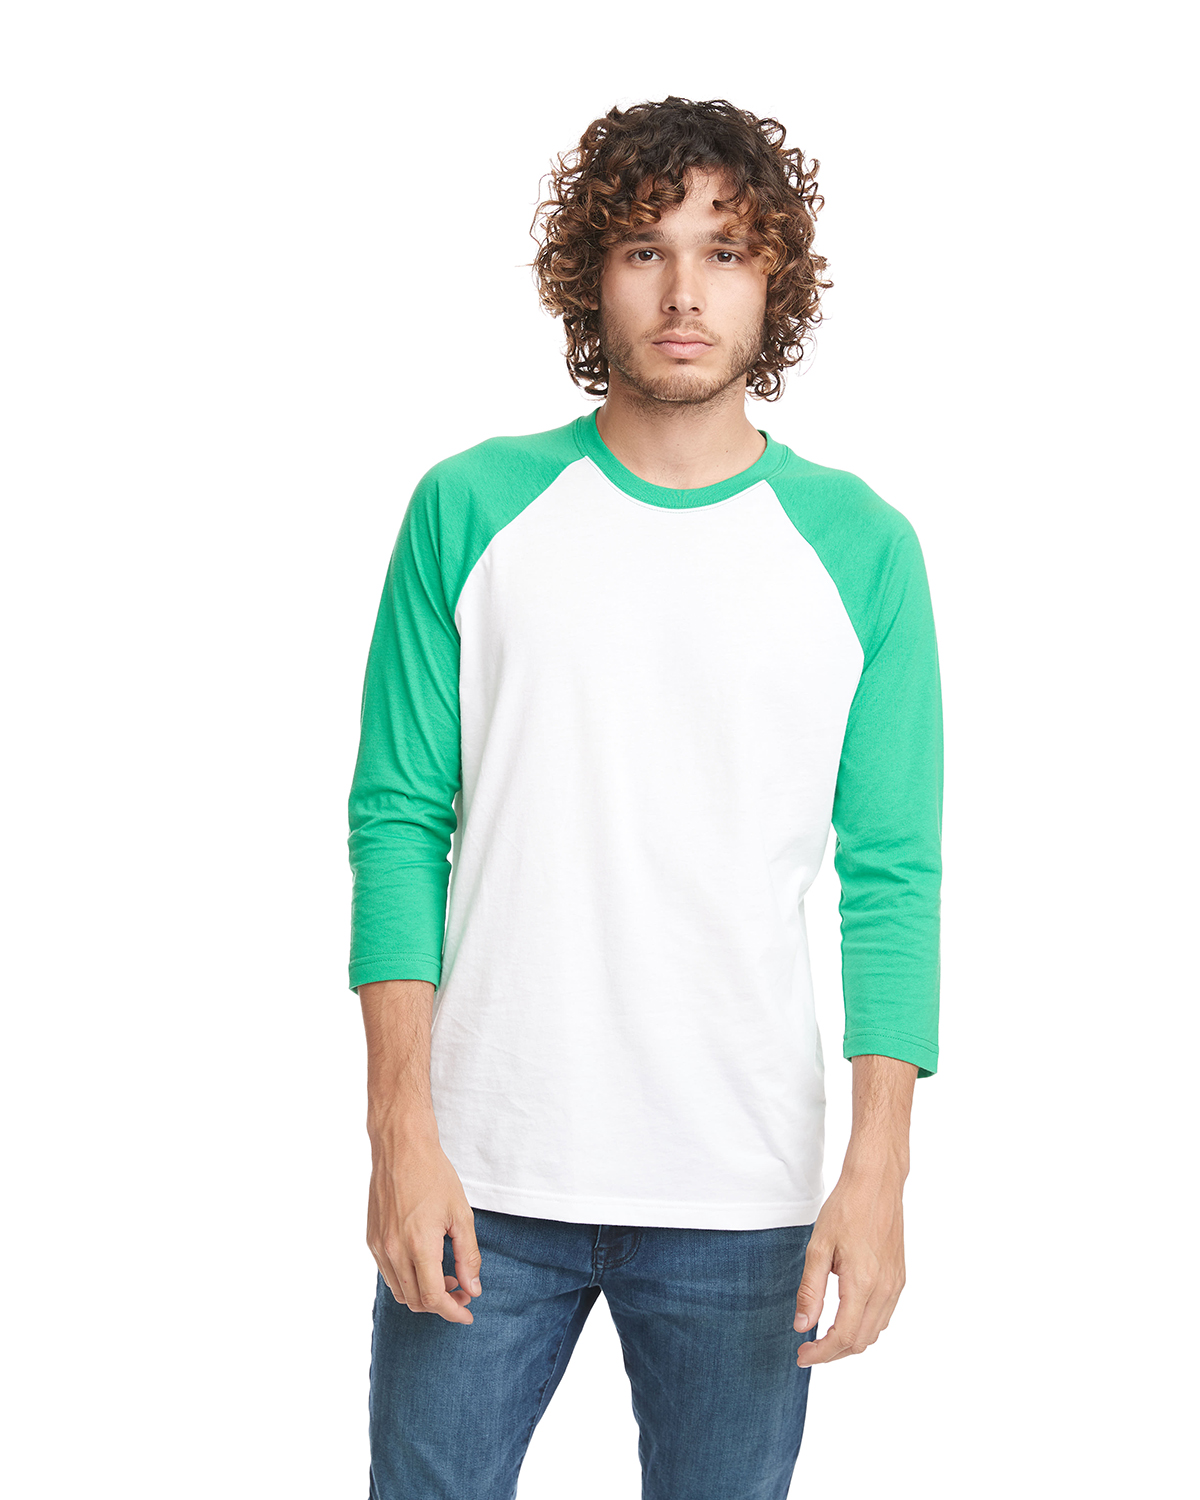 Next Level 6251 Unisex CVC 3/4 Sleeve Raglan Baseball T-Shirt–Kelly Green /  White (S)